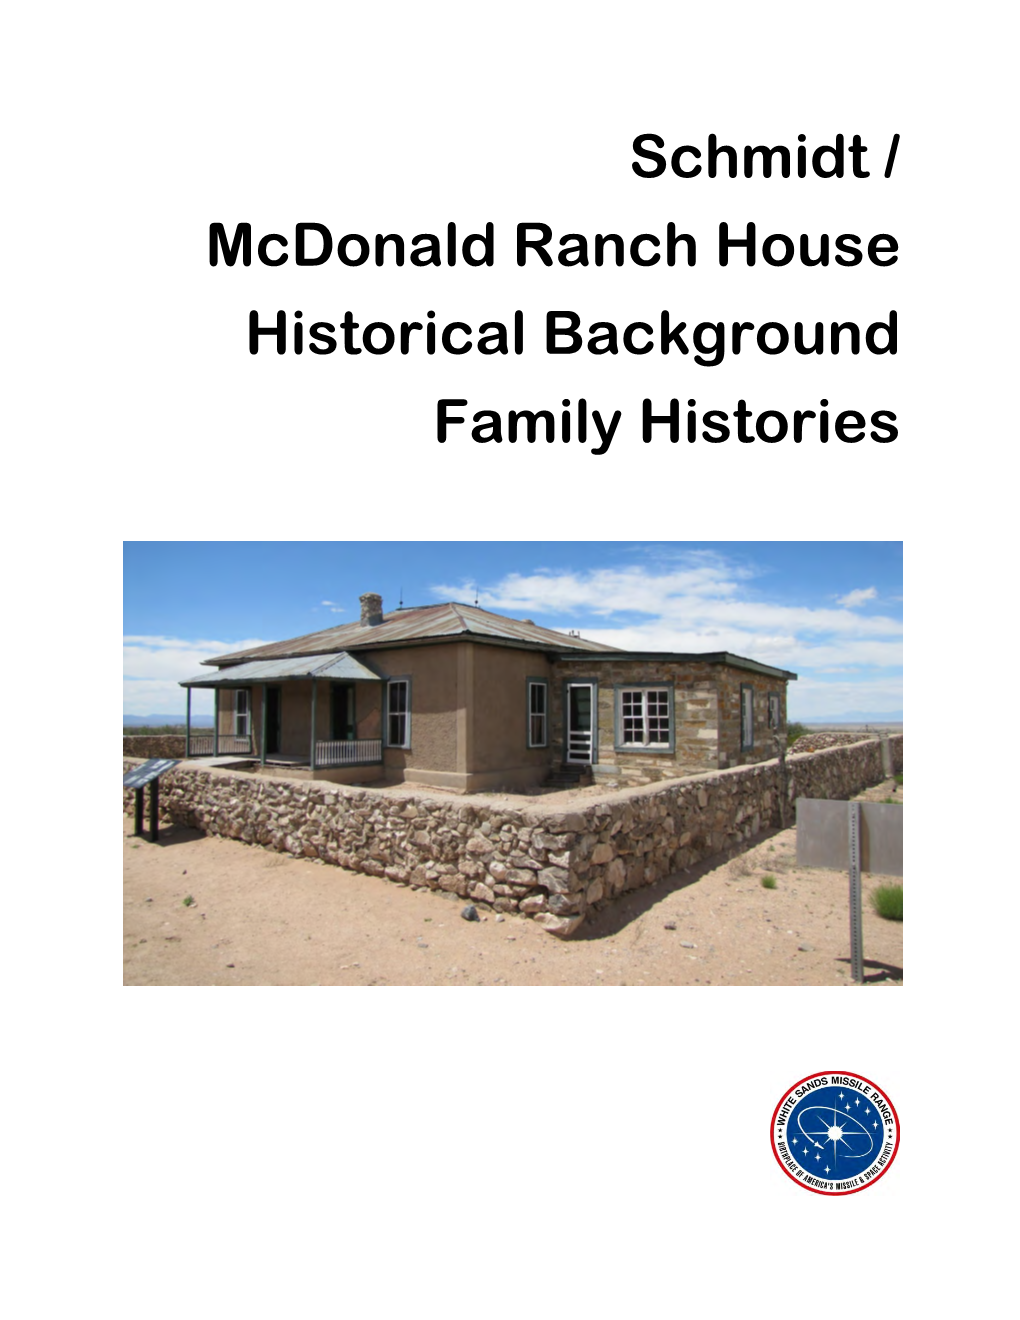 Schmidt Mcdonald Ranch at Trinity